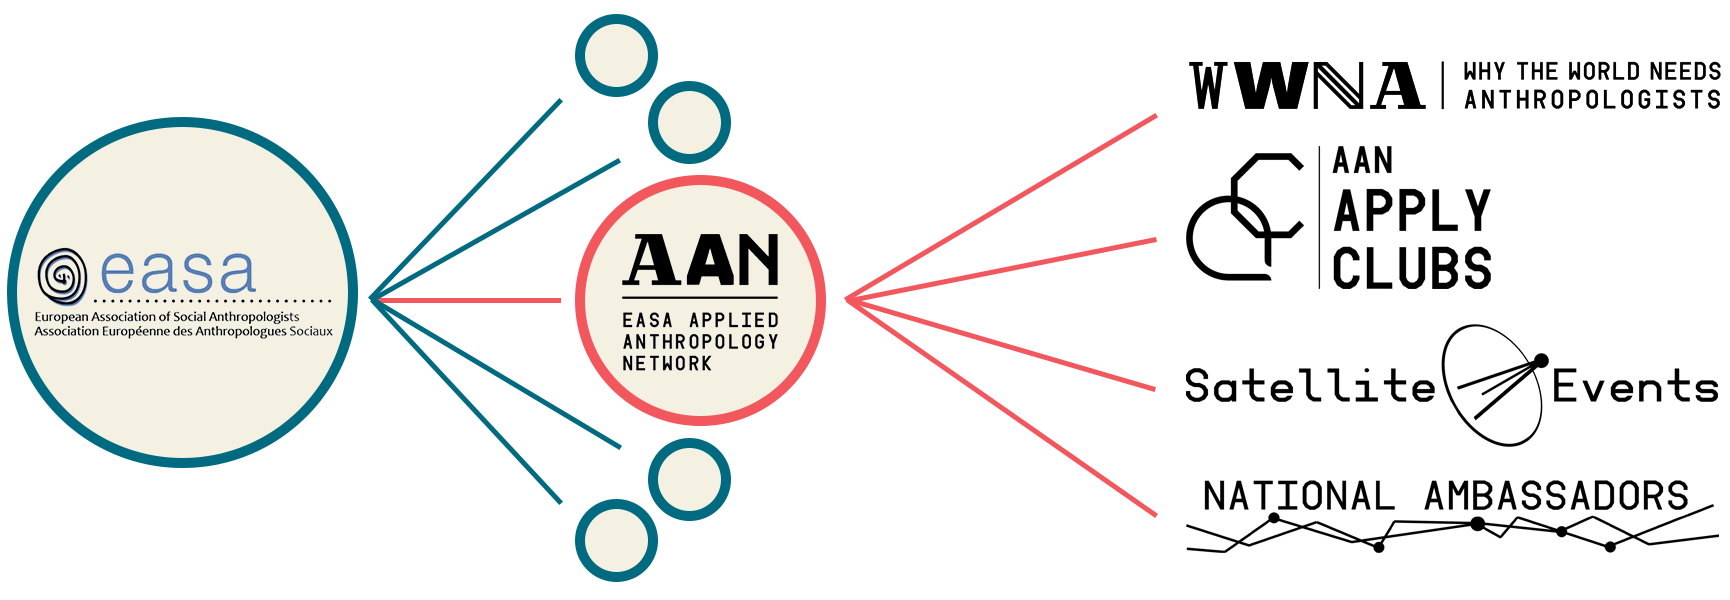 Diagram explaining the Network's structure